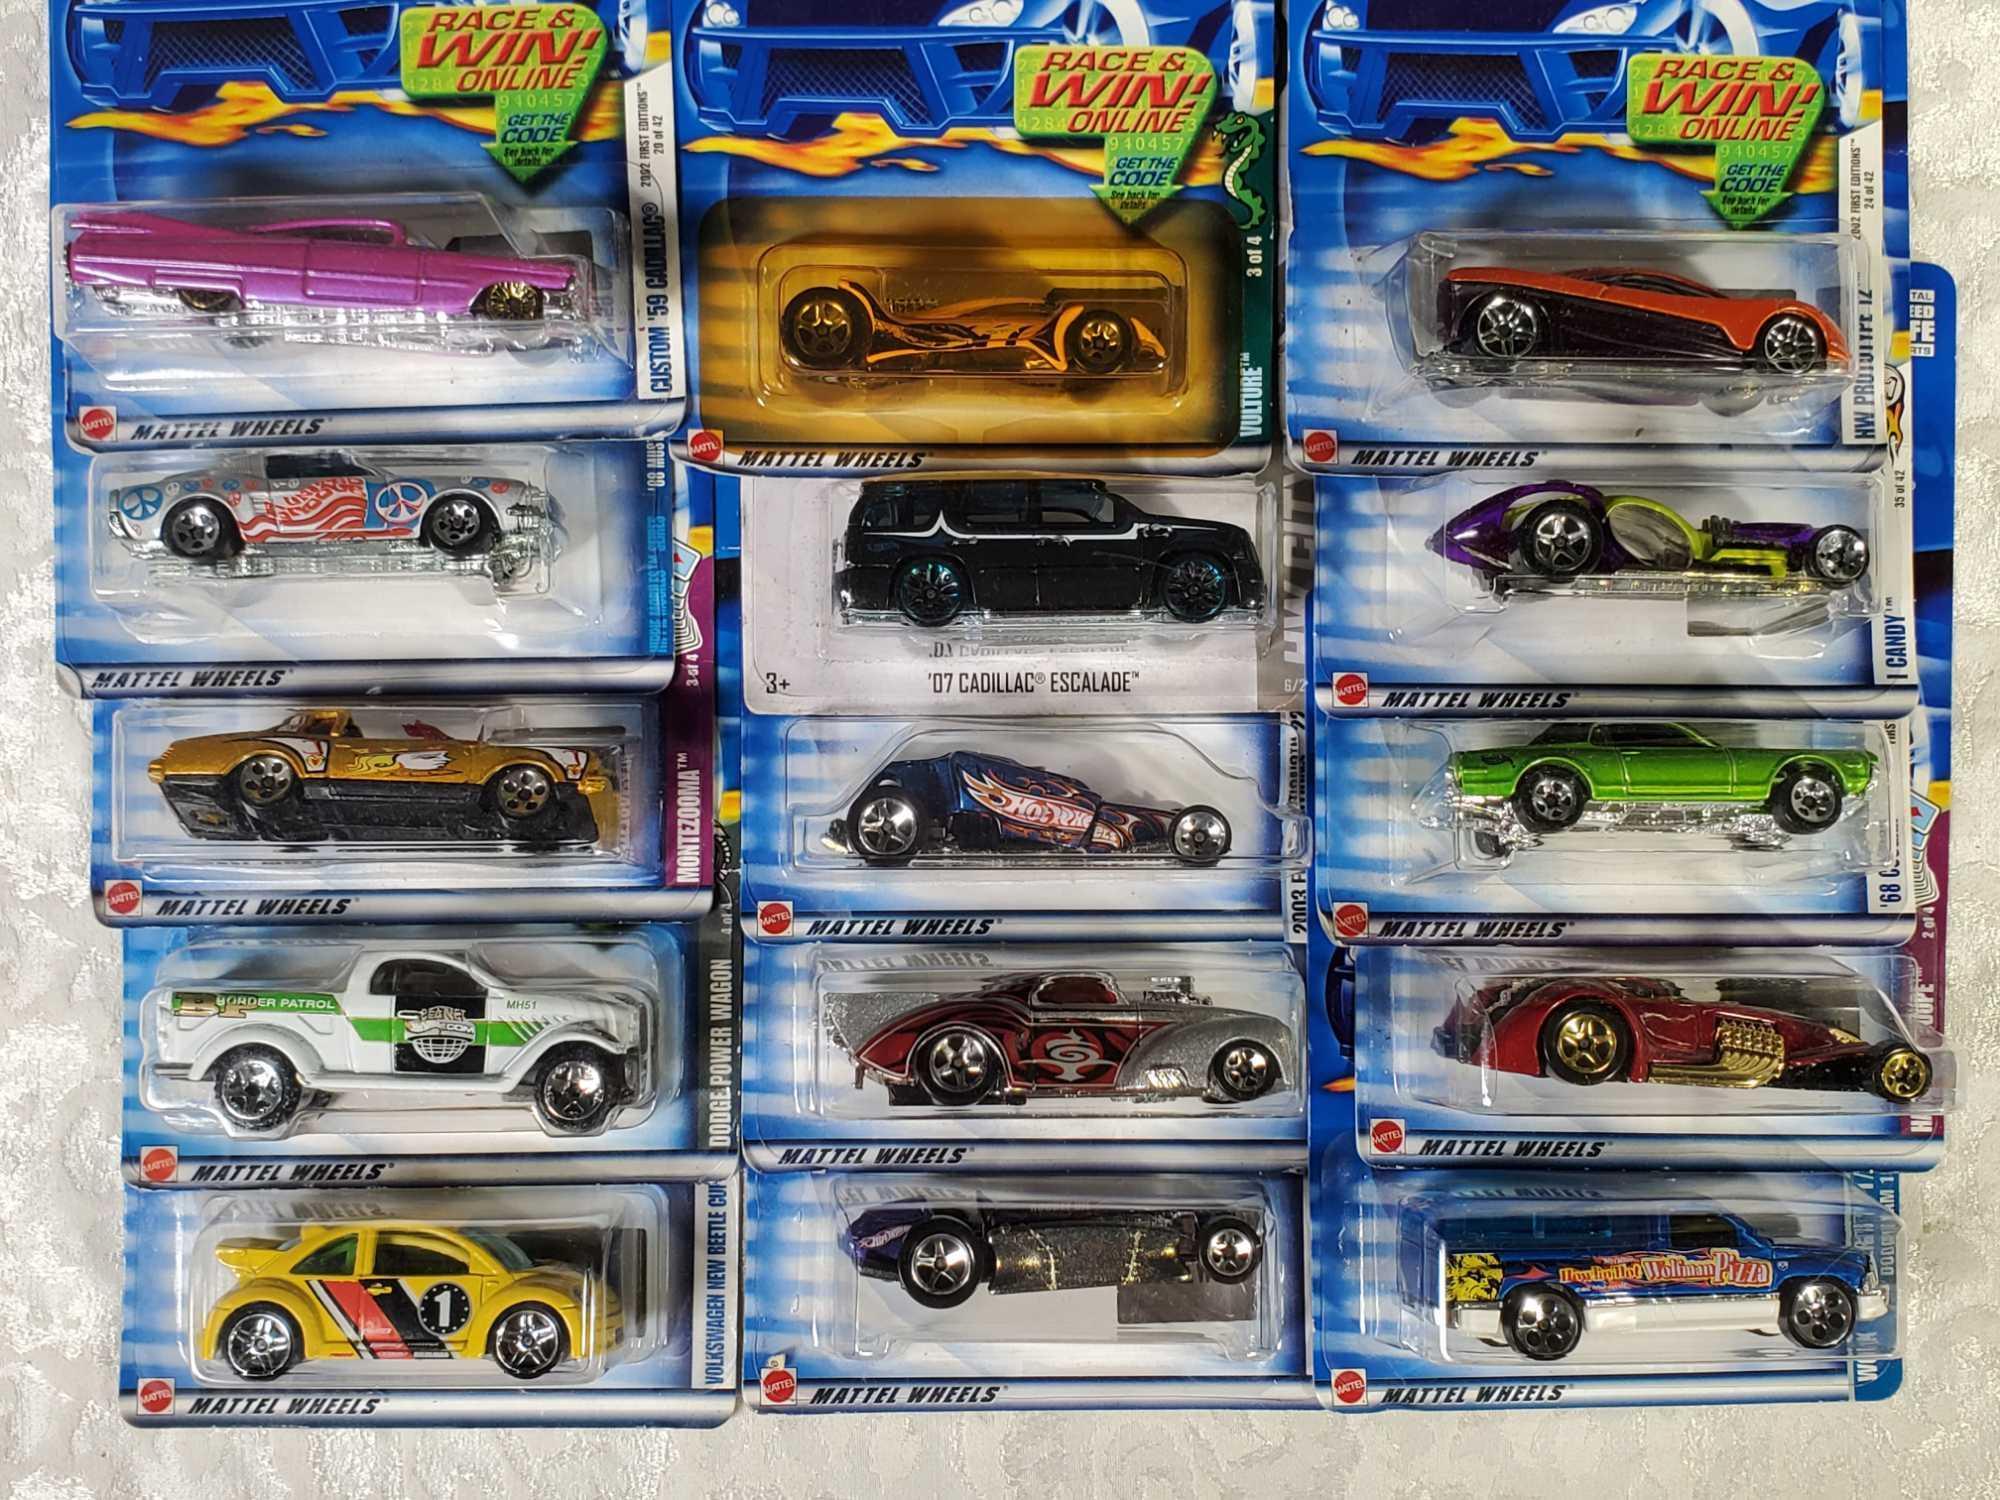 64 Hot Wheels 1/64 Scale Die Cast Cars In Original Bubble Packs